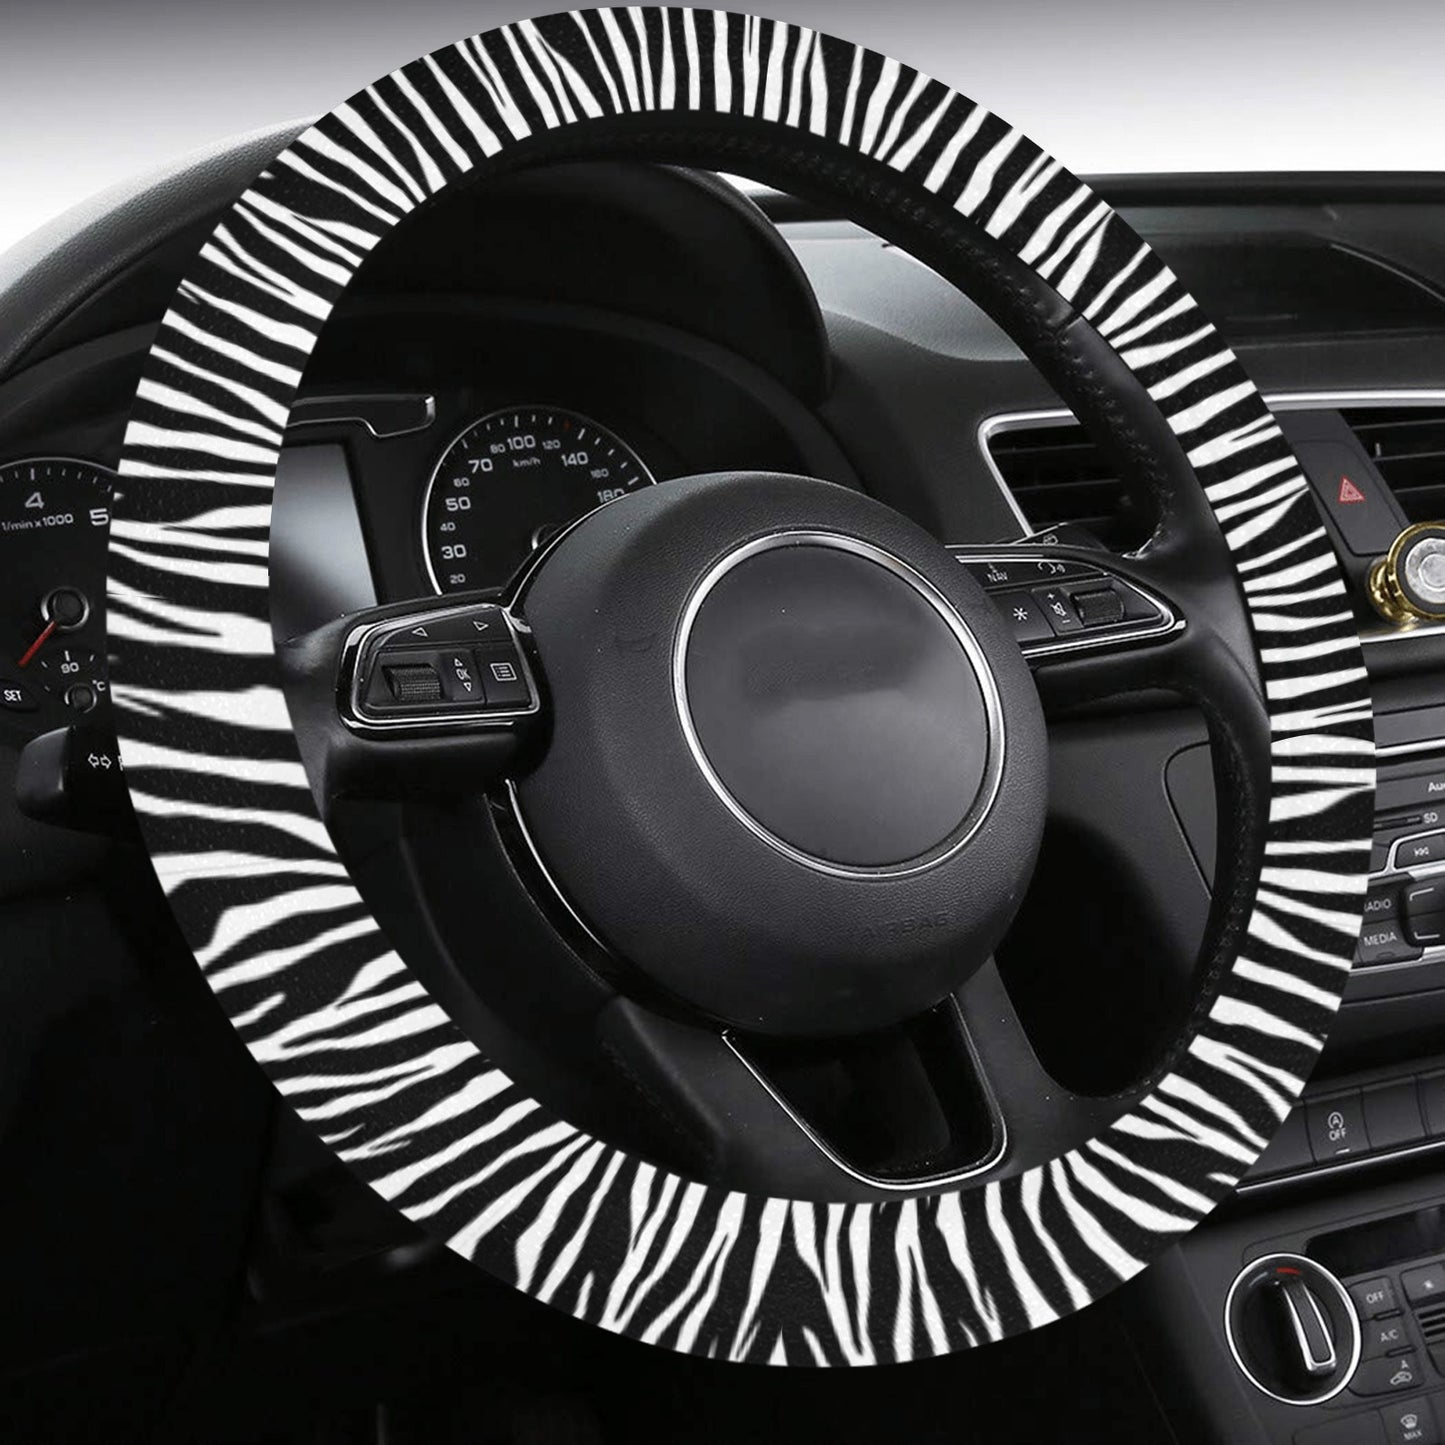 Zebra Steering Wheel Cover with Anti-Slip Insert, Black White Stripes Animal Print Car Auto Wrap Protector Women Men Accessories Starcove Fashion